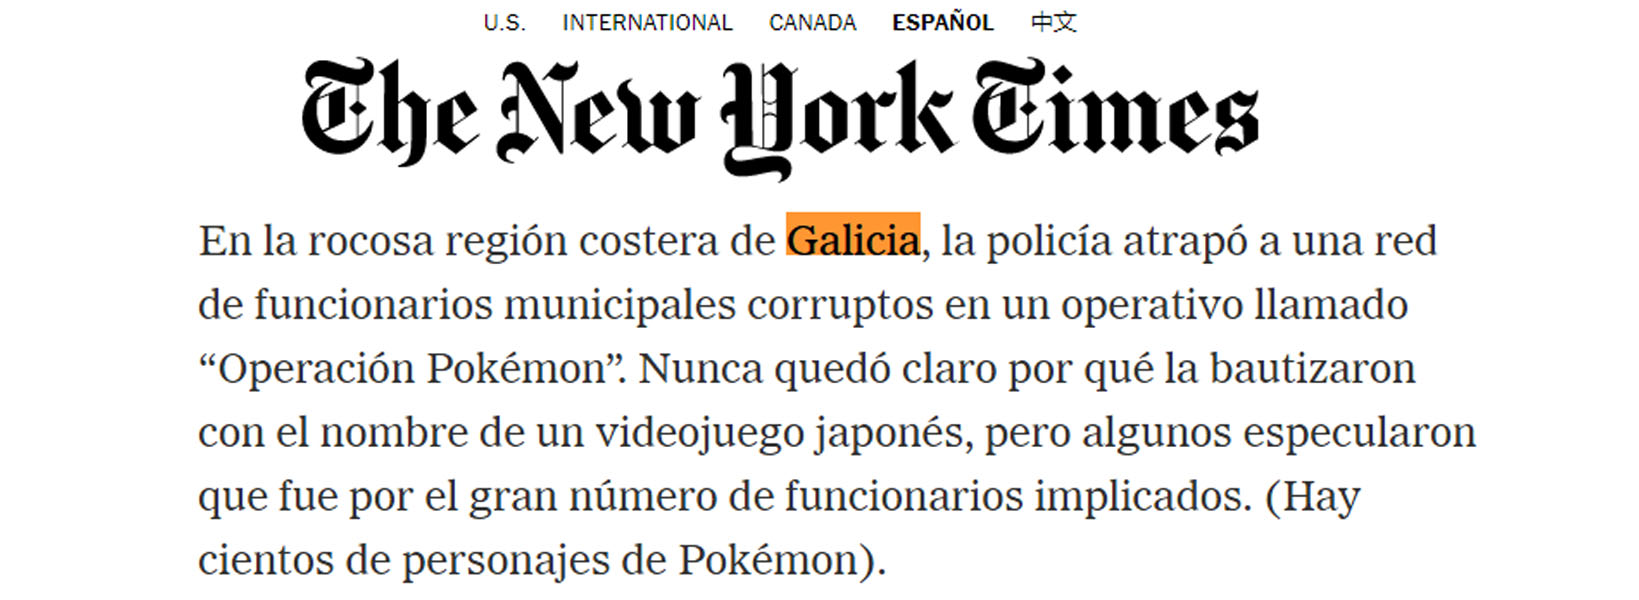 newyorktimes galicia corruptos equipodefeijooenlaxunta 1